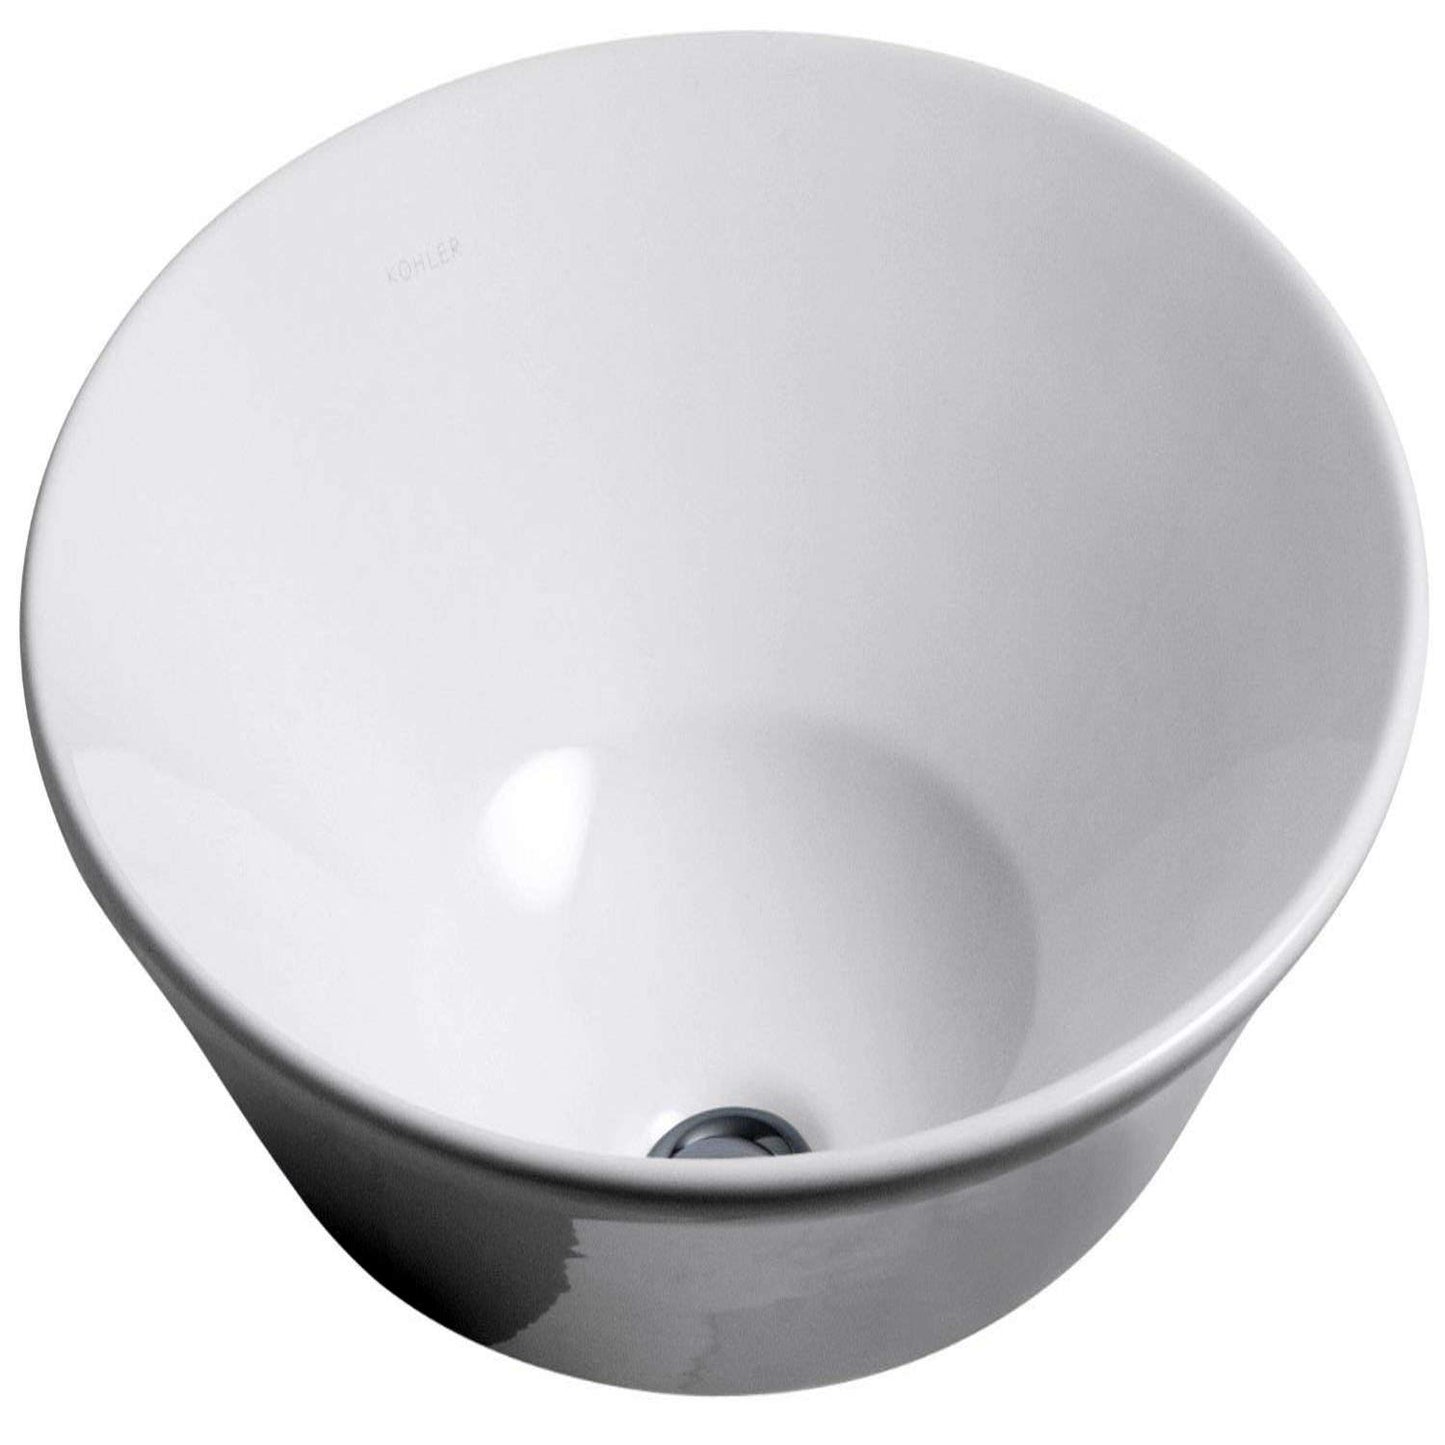 Kohler 2200-0 Vitreous china Wall Mounted Round Bathroom Sink, 24 x 20.5 x 9.75 inches, White